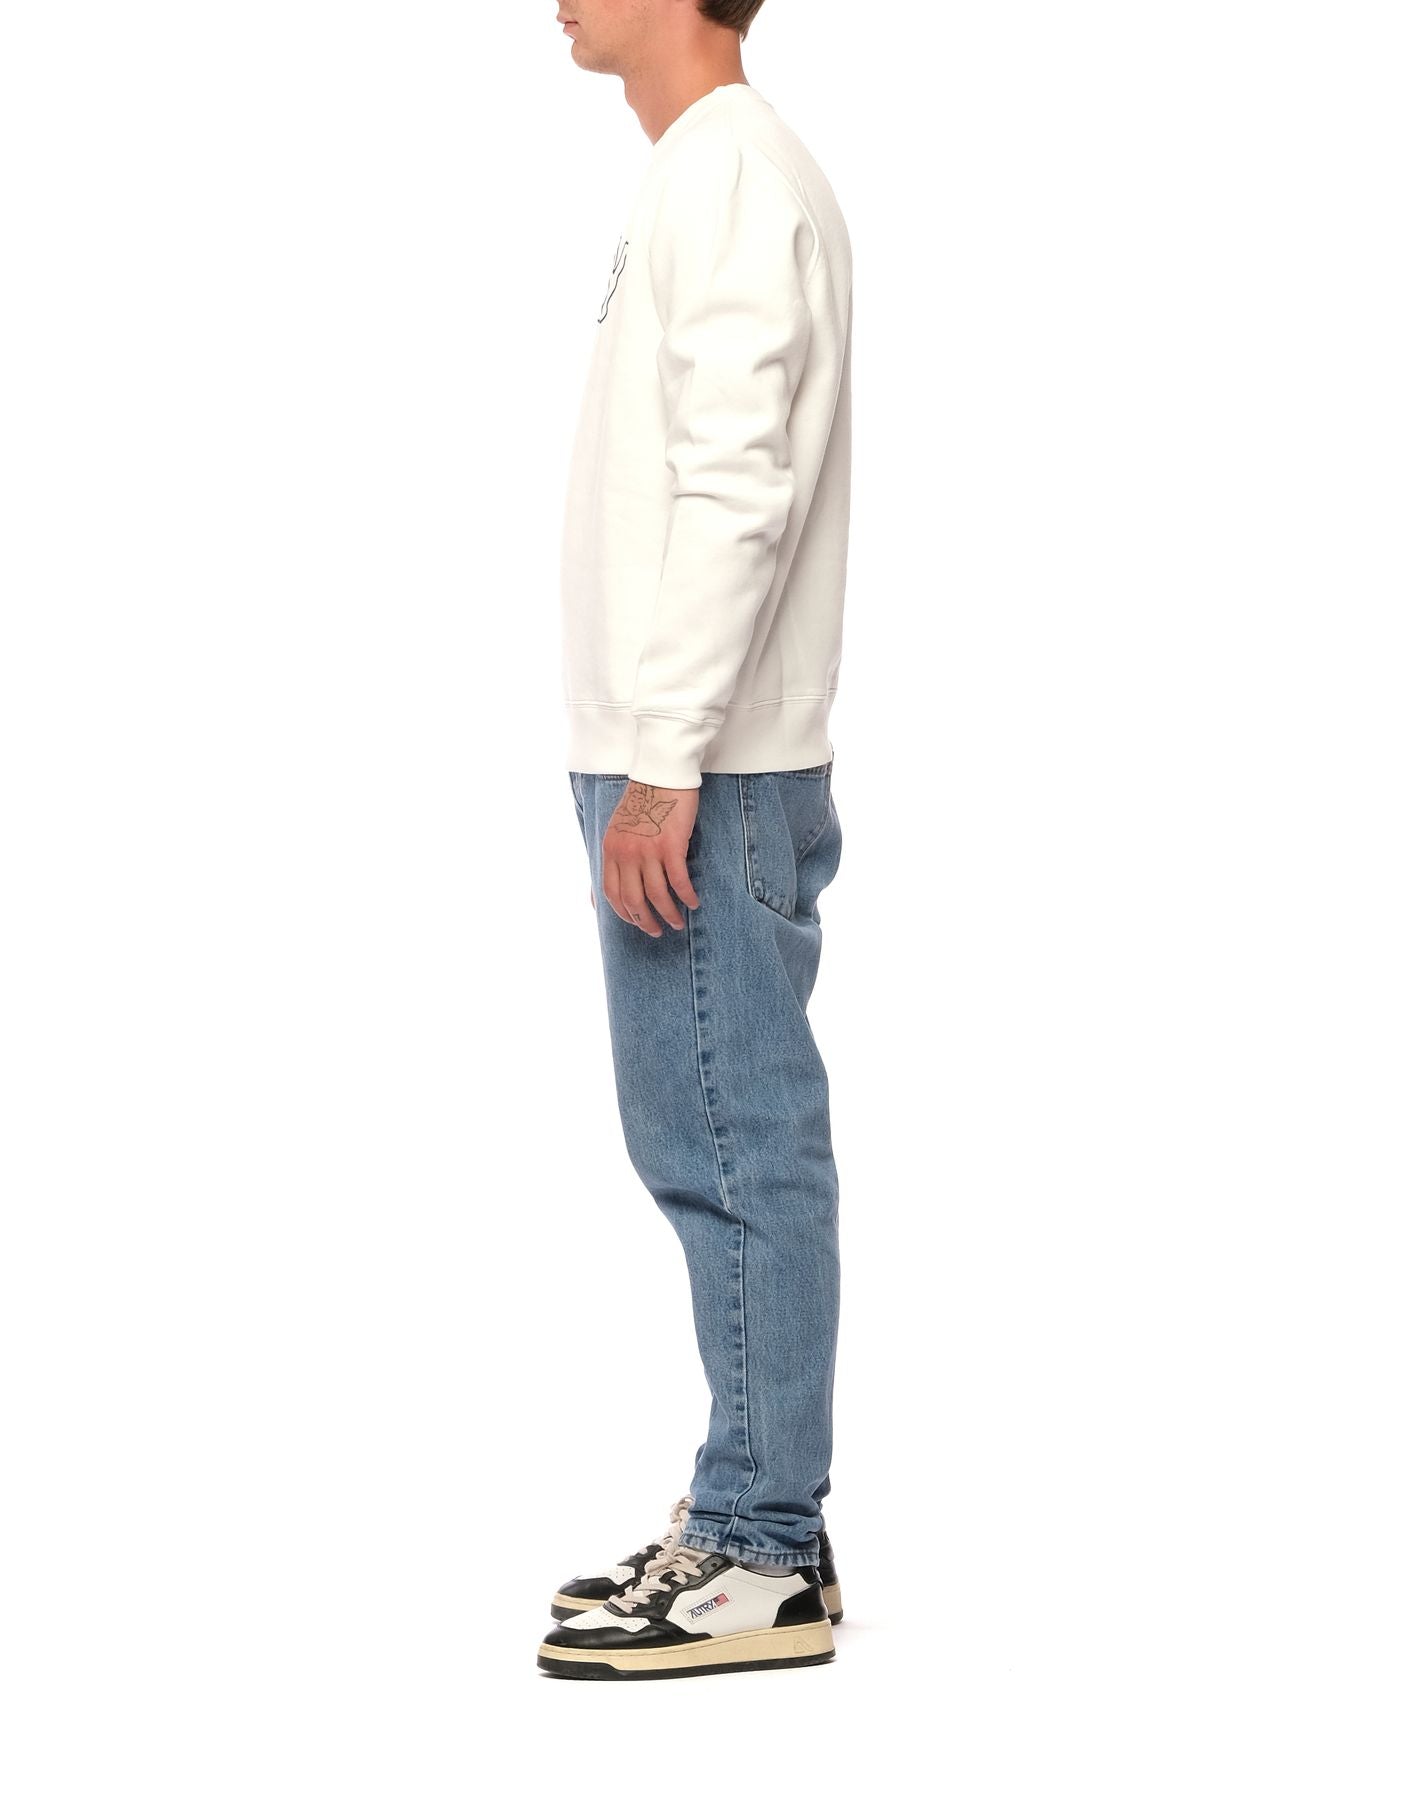 Sweatshirt man SWIM 408W WHITE Autry